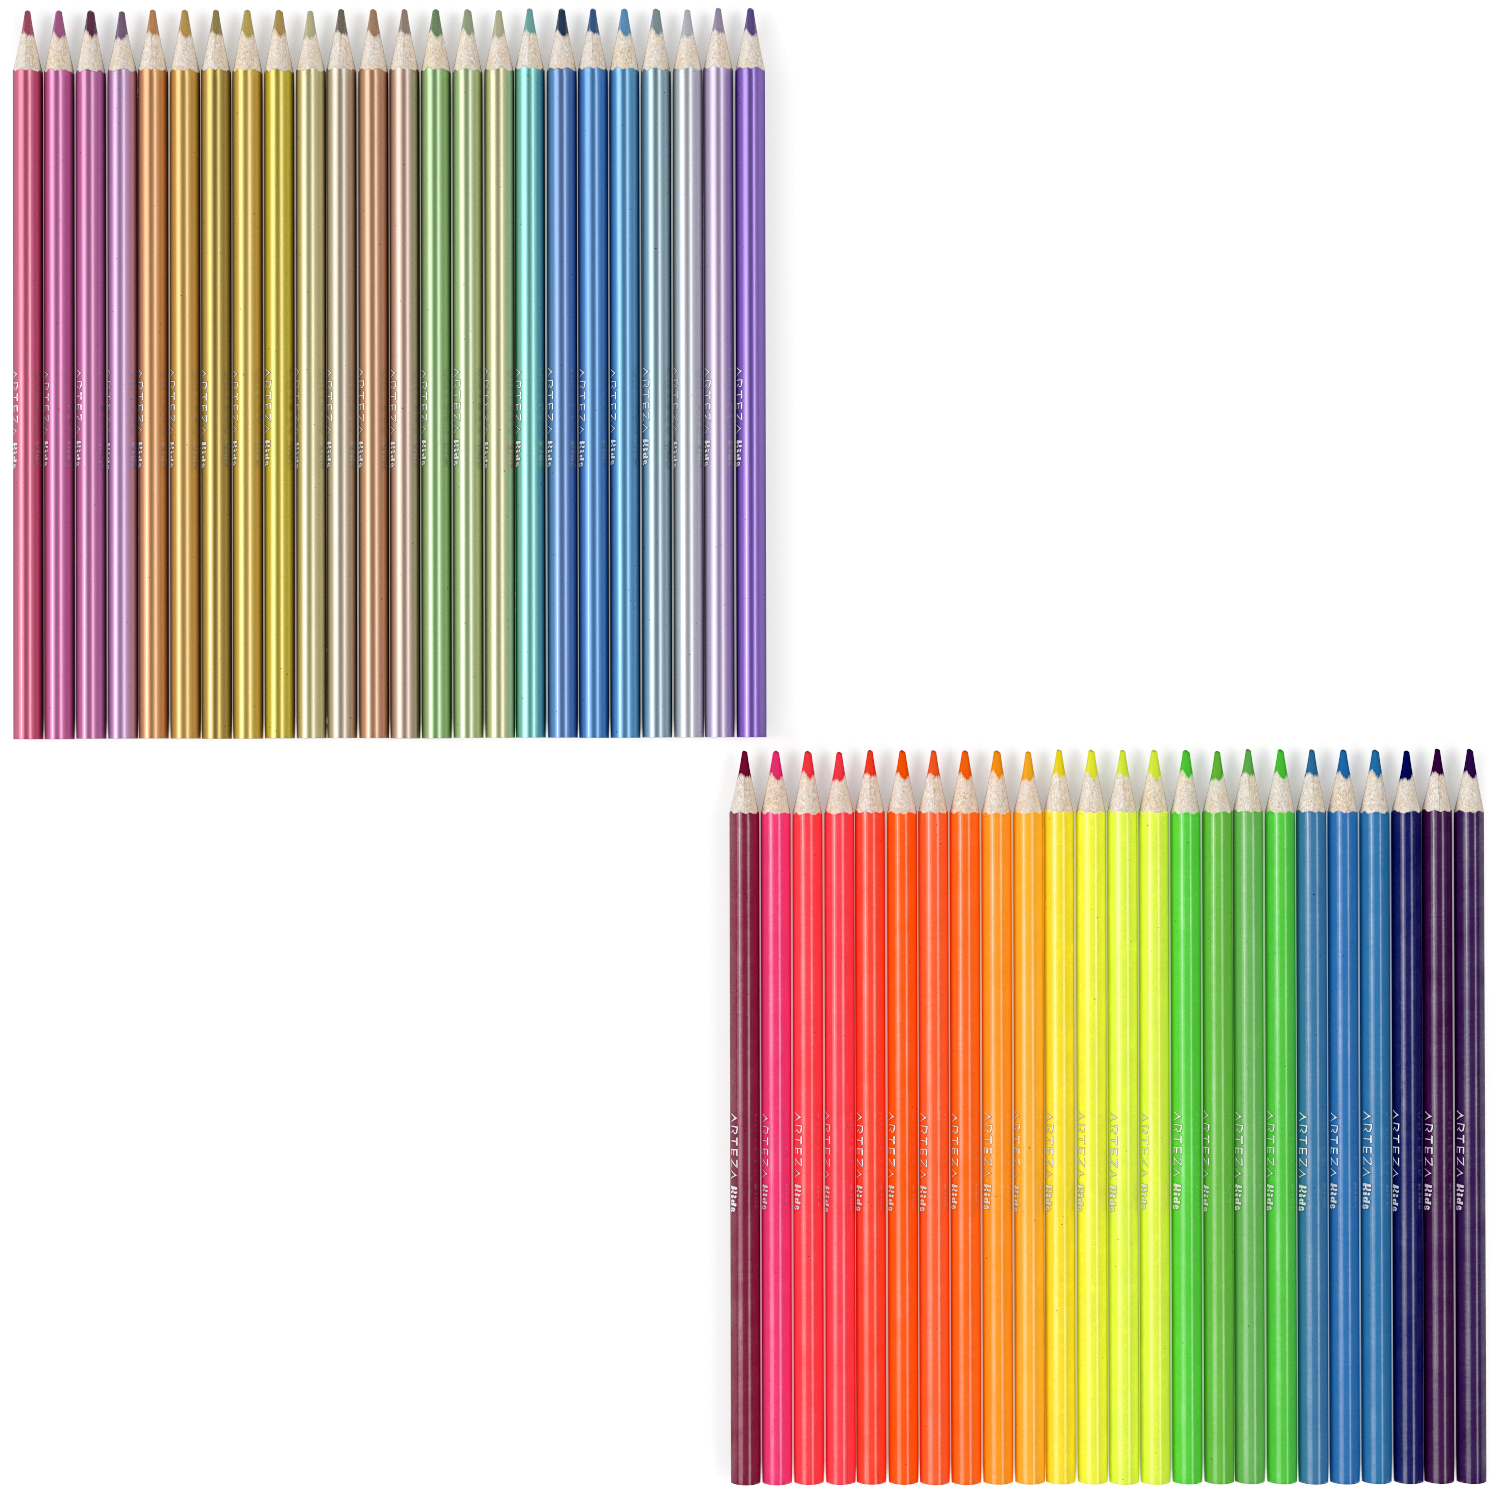 ARTEZA Colored Pencils Set, 48 Colors with Color Names, Triangular